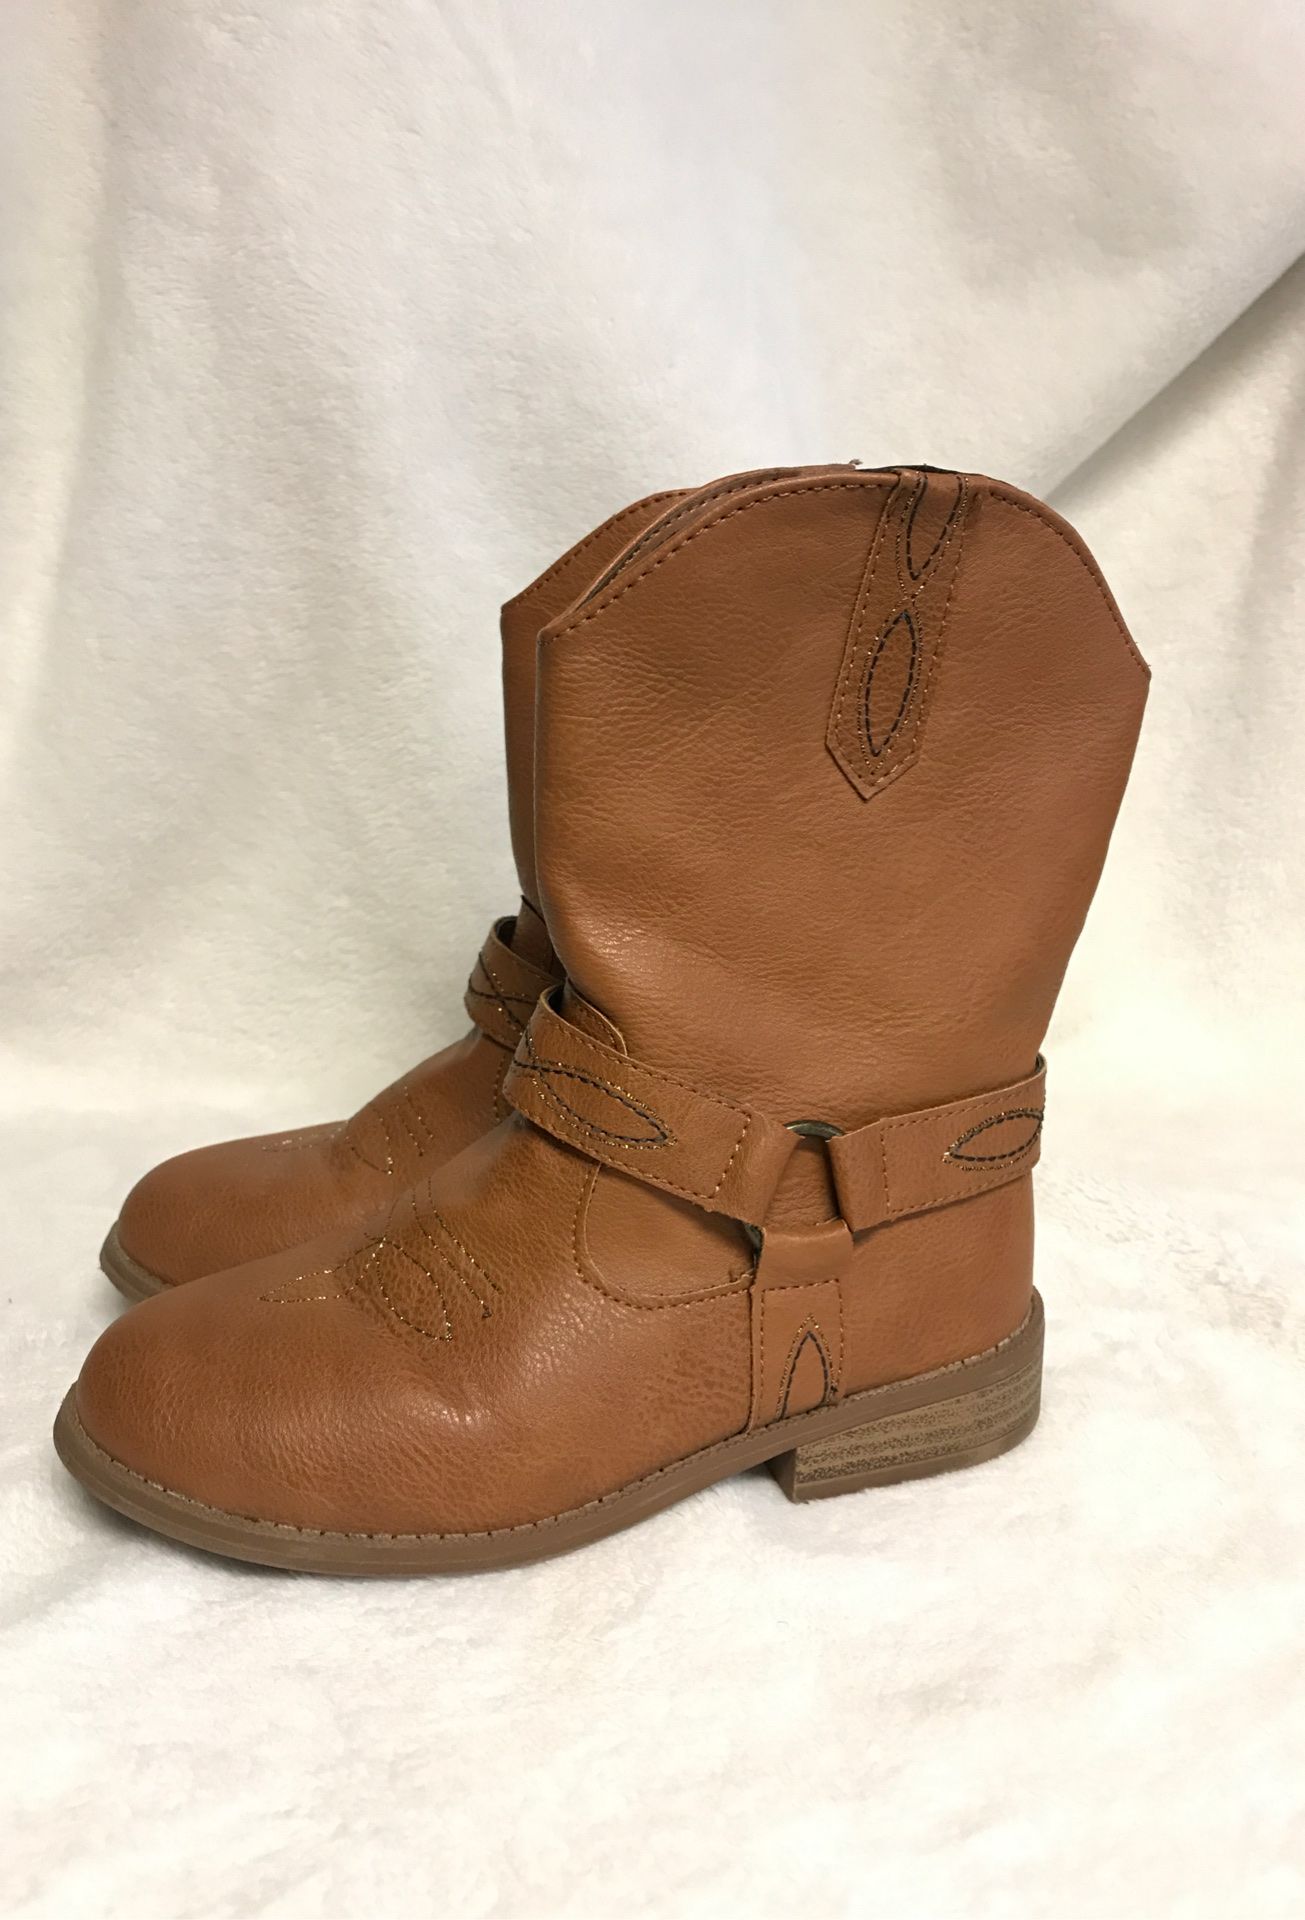 Girls cowboy boots size 12